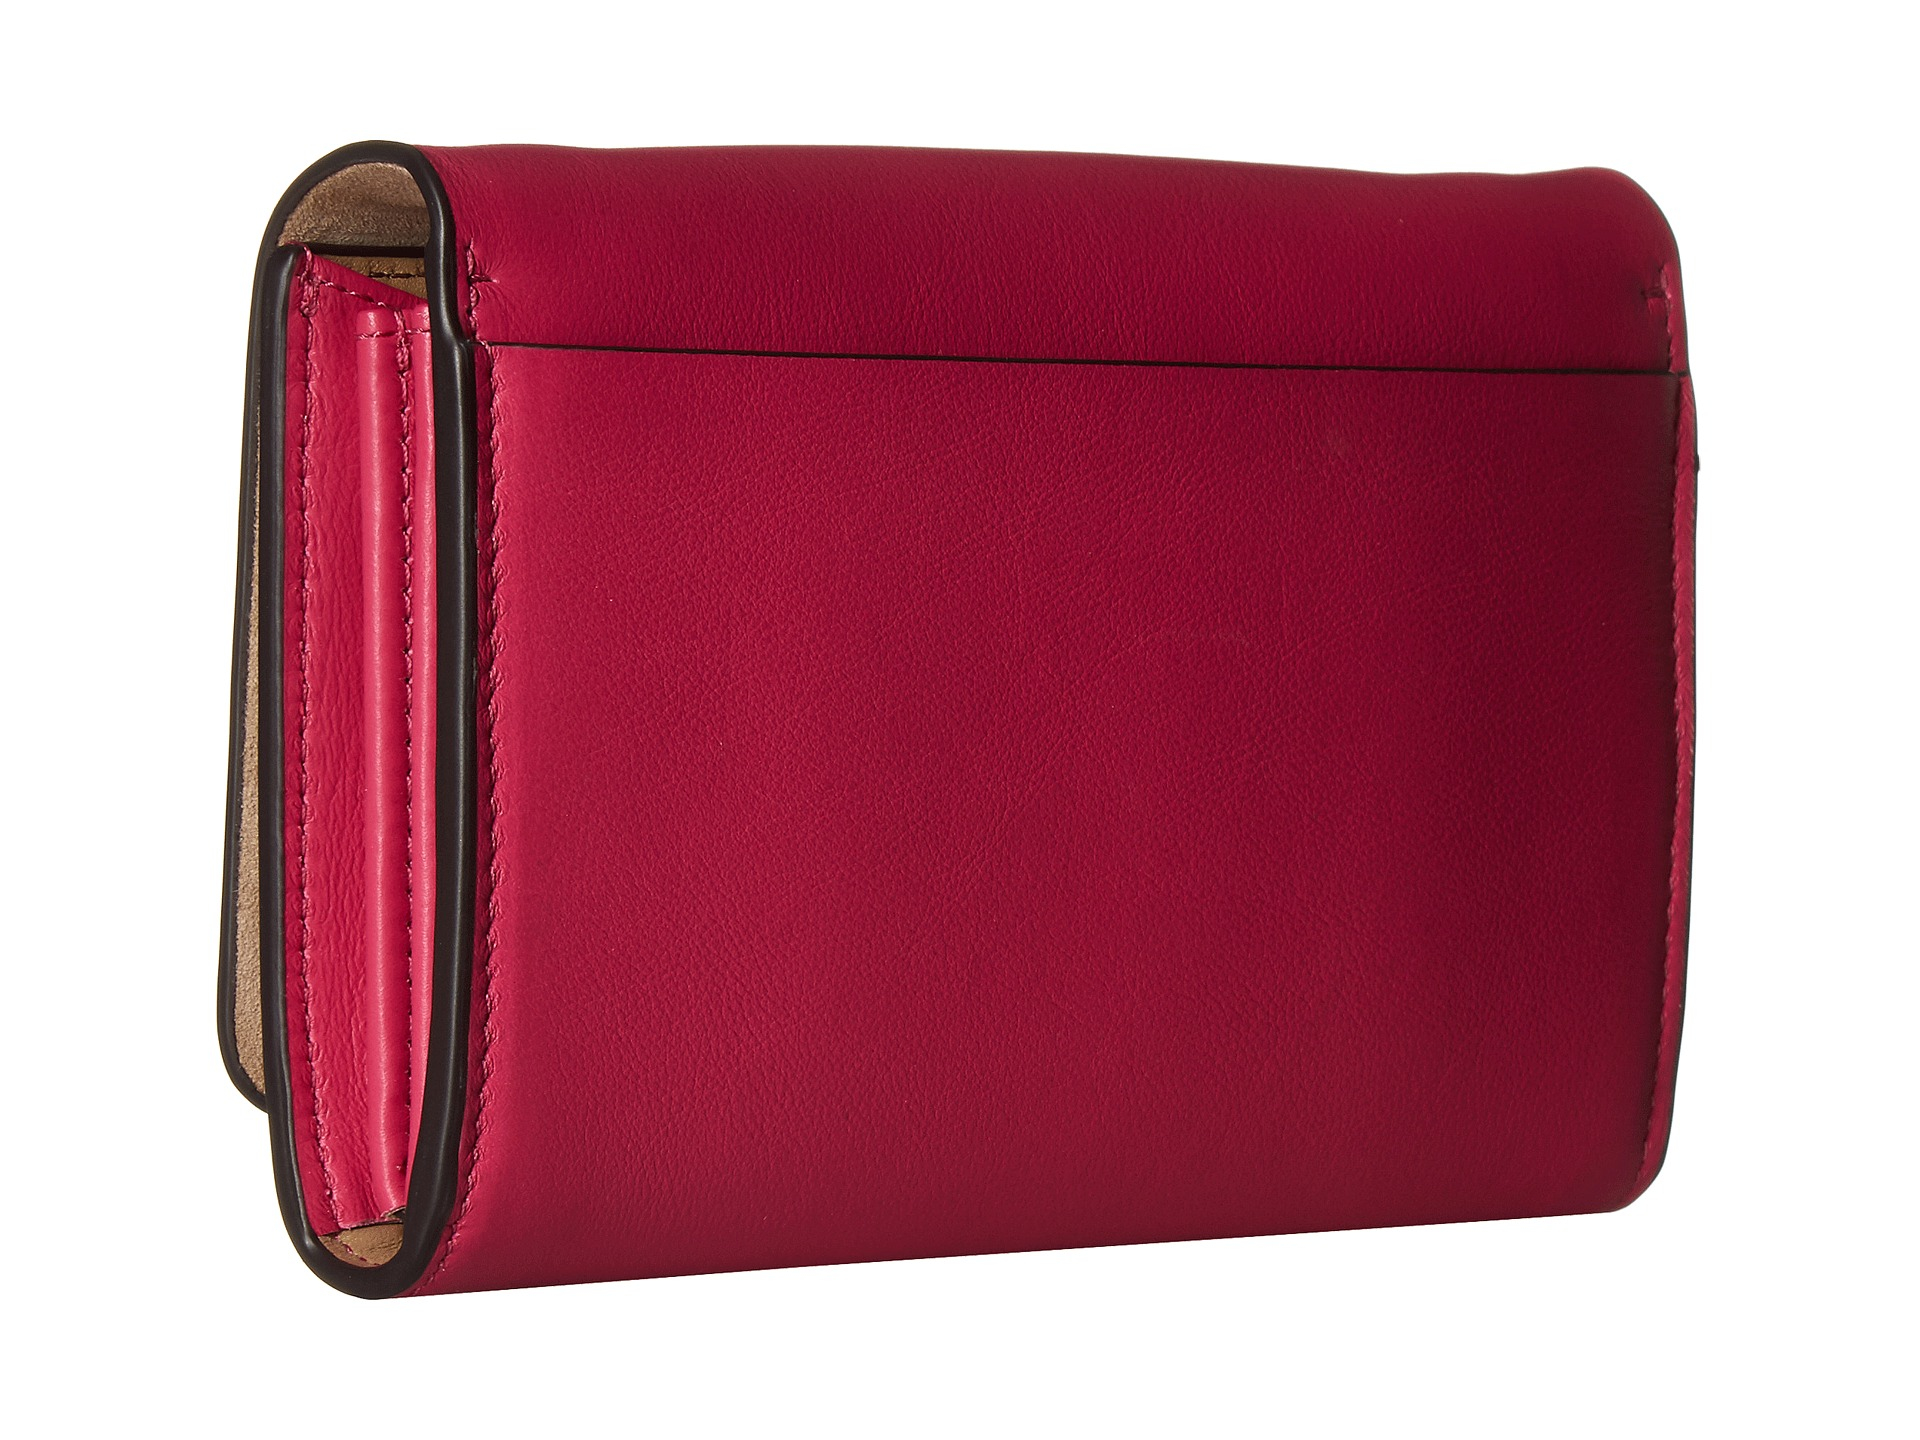 Lyst - Michael Kors Miranda Medium Wallet With Shoulder Strap in Pink